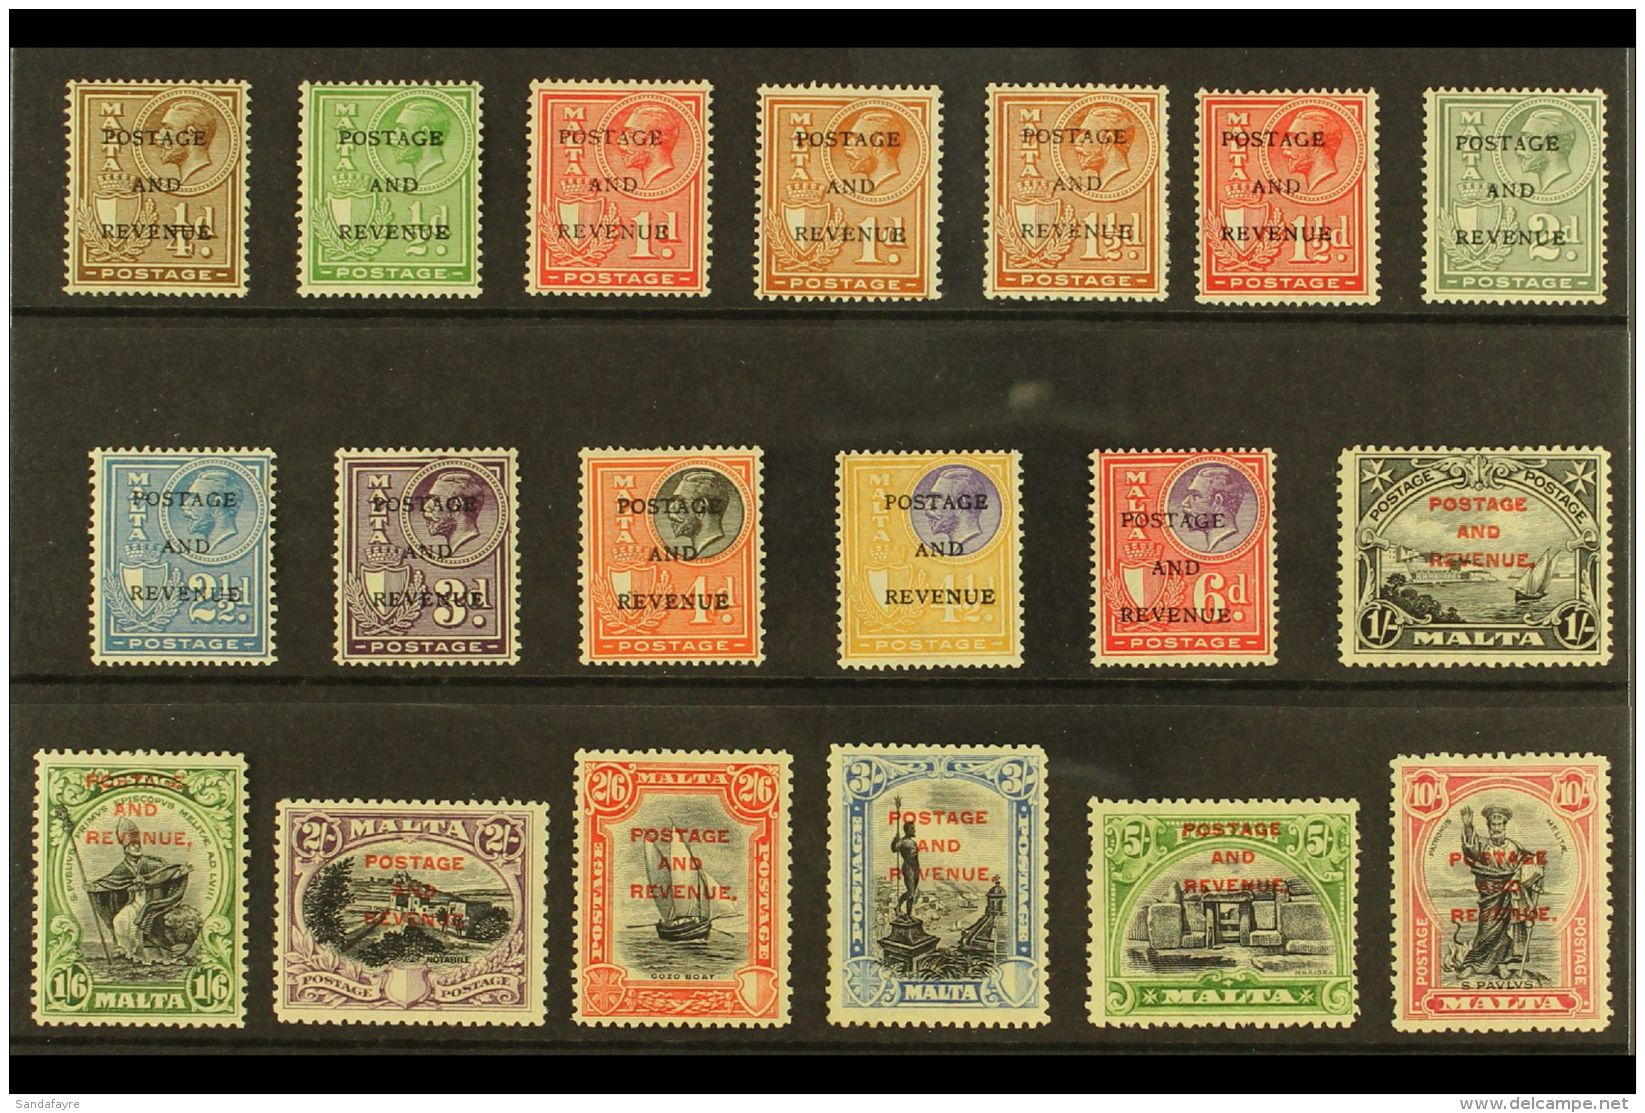 1928 "POSTAGE AND REVENUE" Overprinted Complete Set, SG 174/92, Fine Fresh Mint. (19 Stamps) For More Images,... - Malta (...-1964)